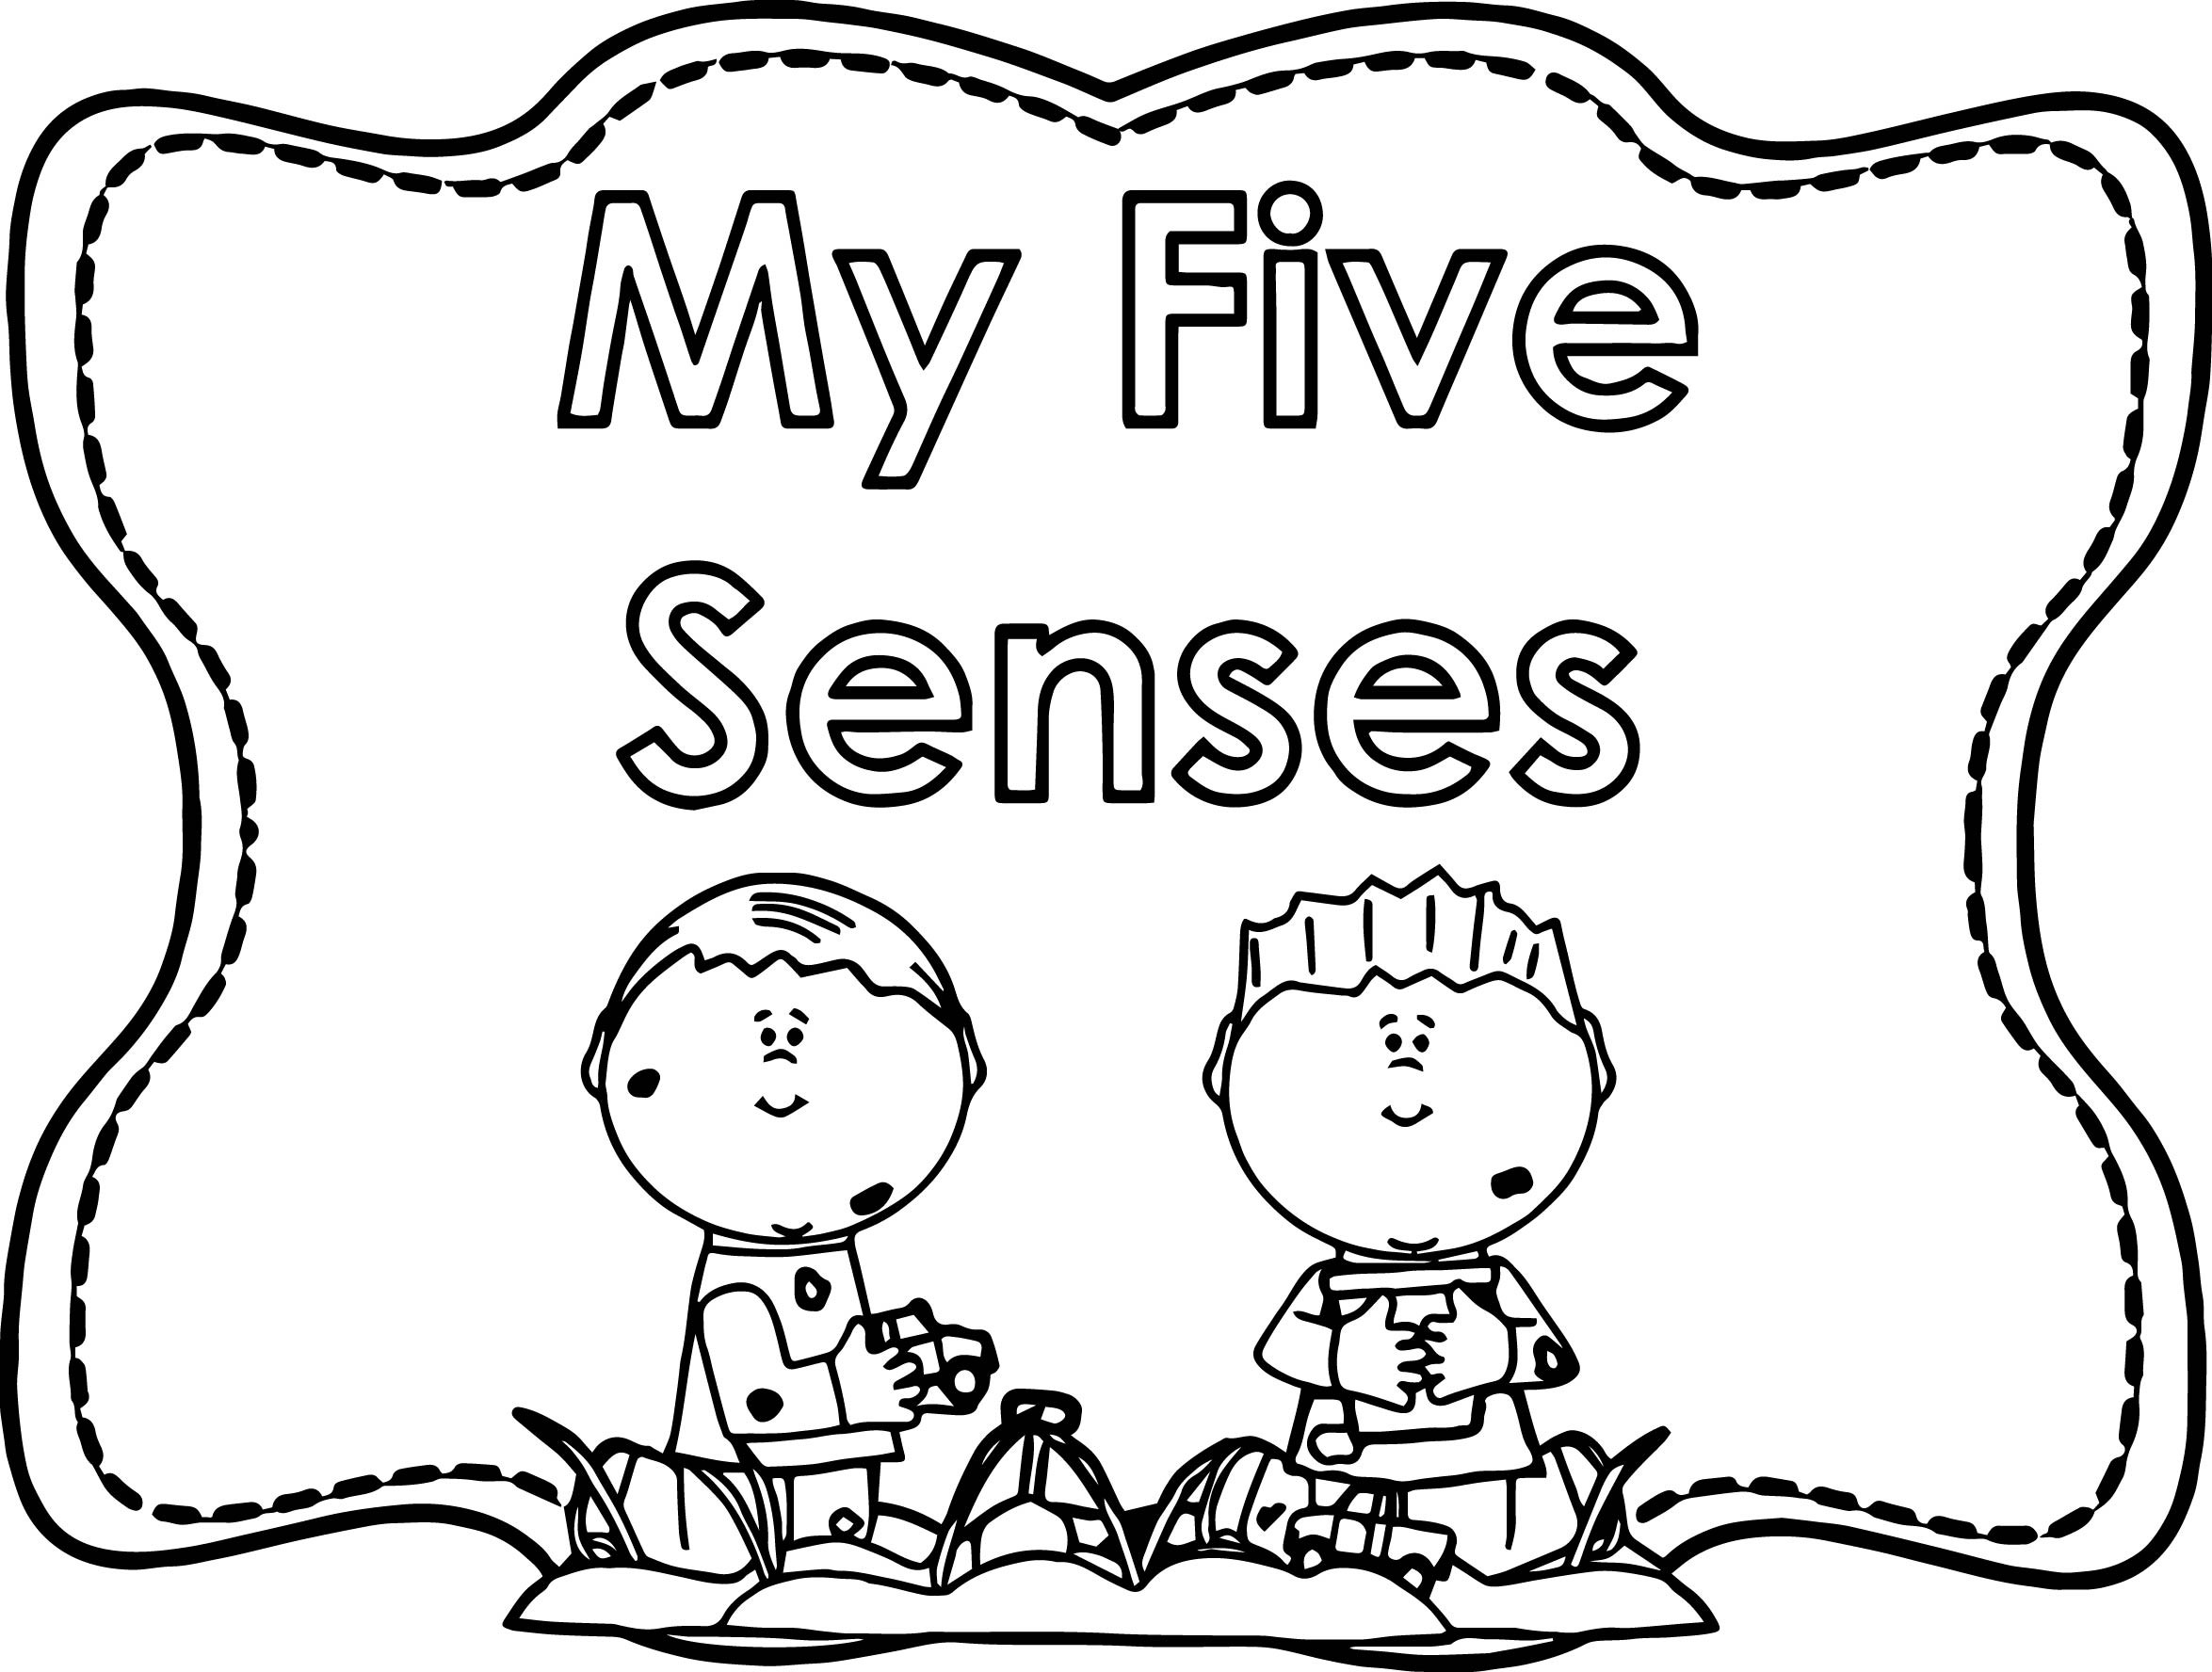 5 Senses Coloring Pages
 My Five Senses Coloring Page